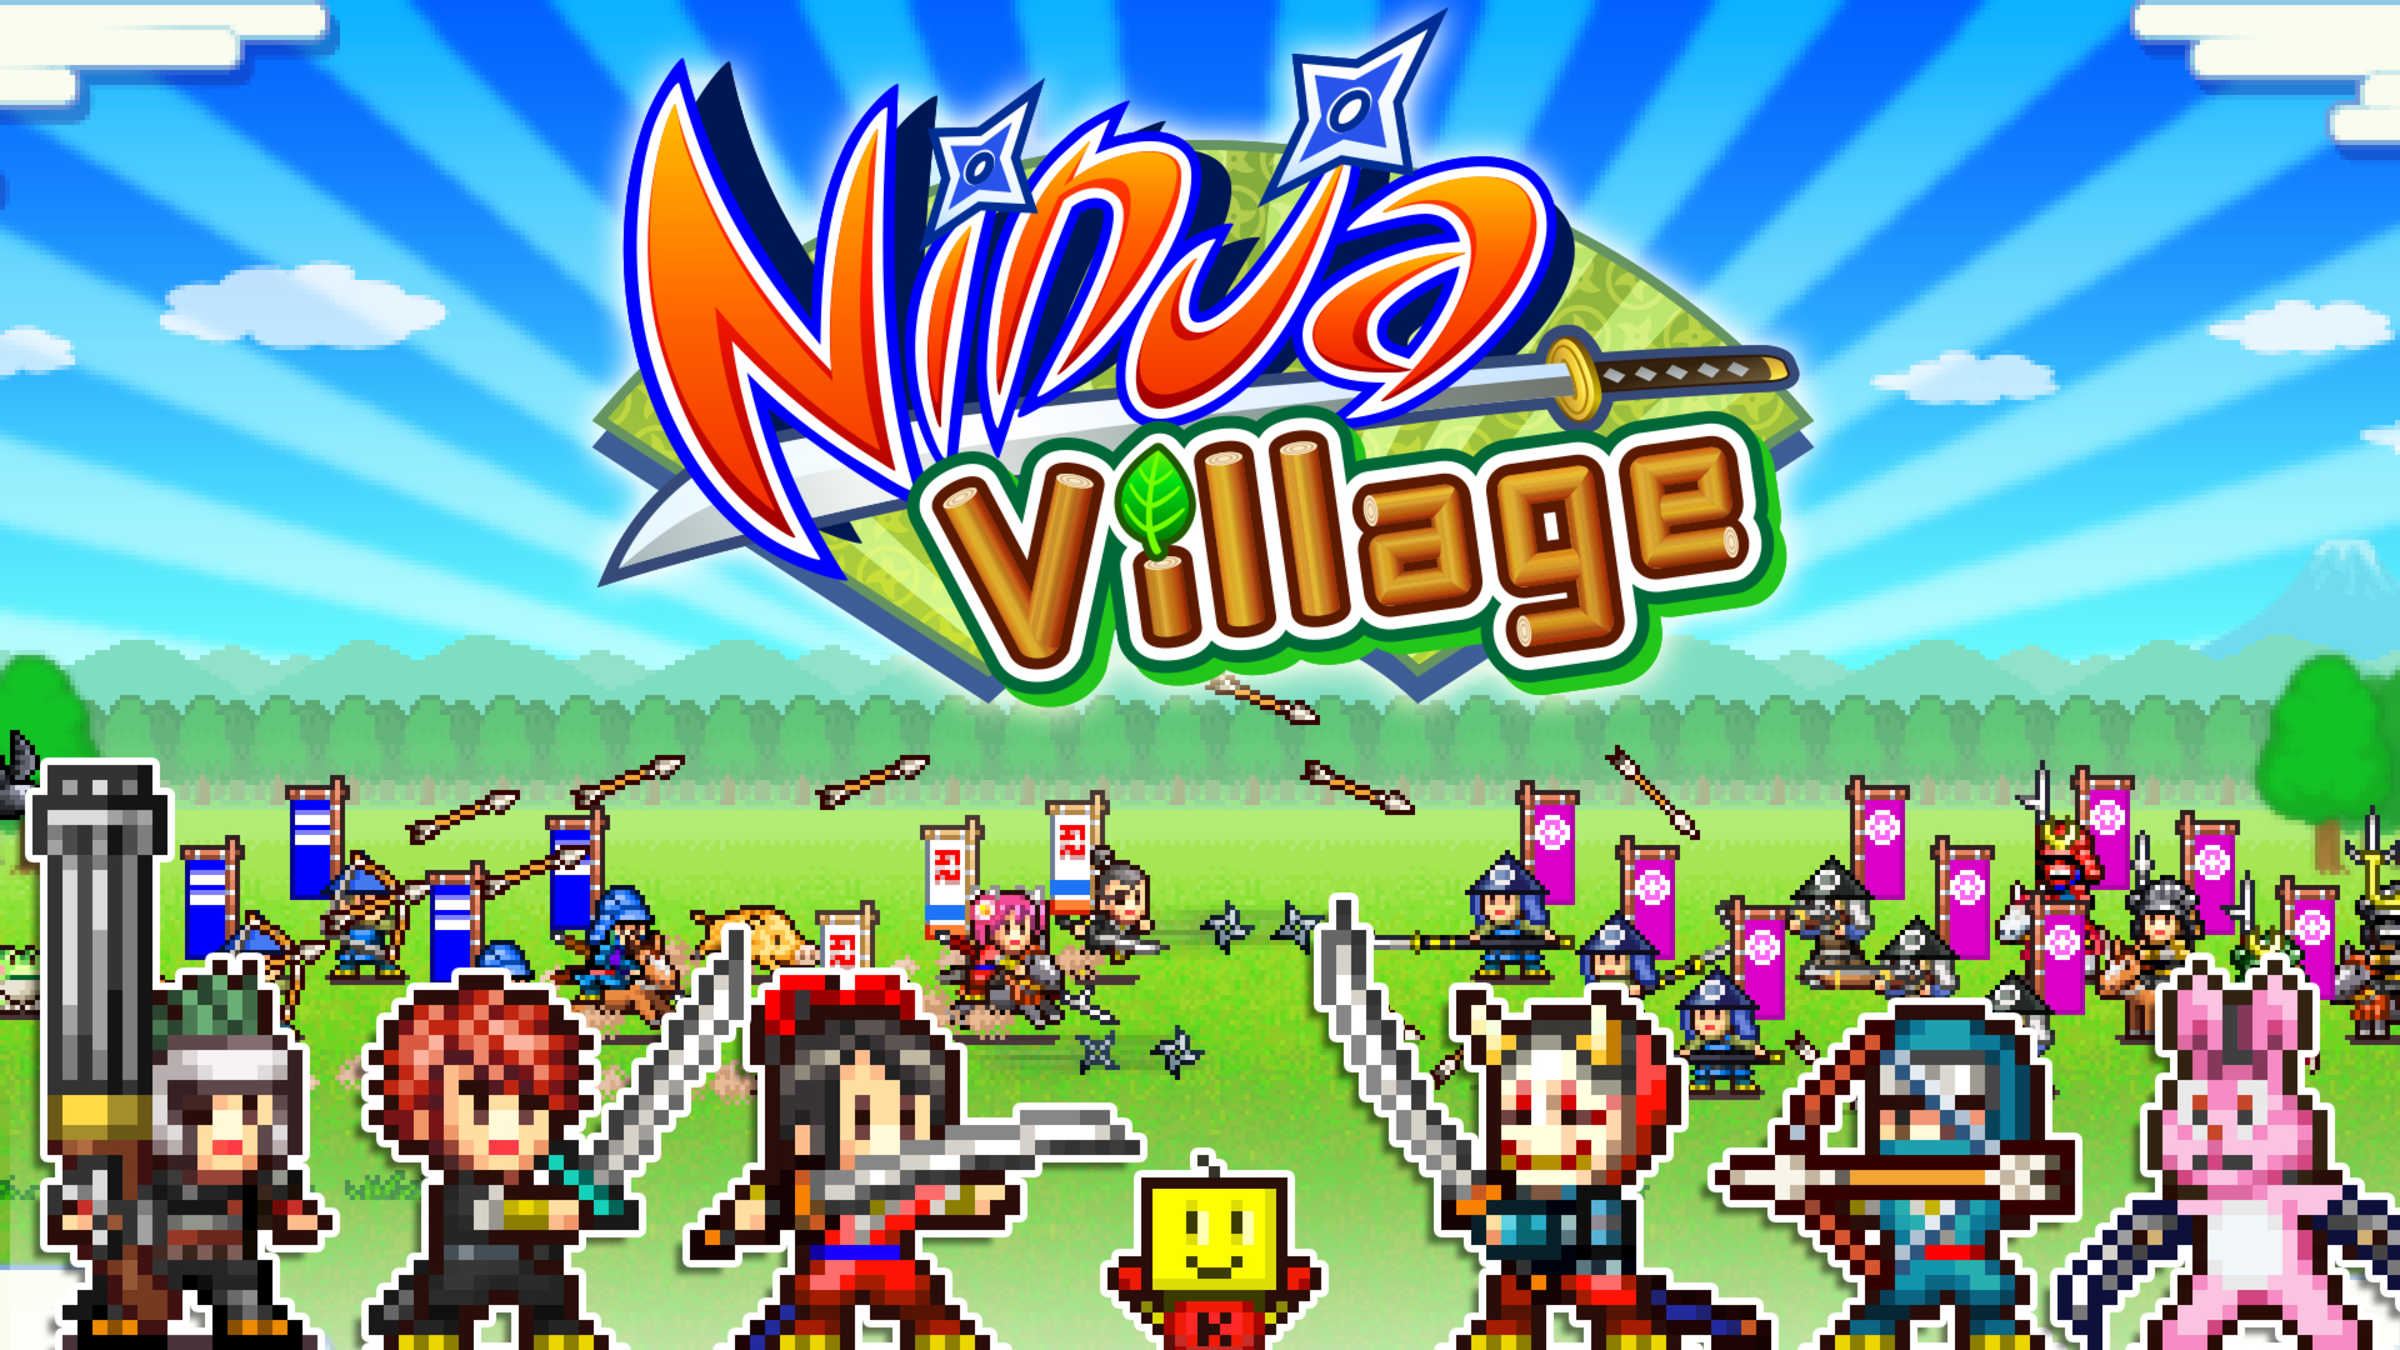 Ninja Village for Nintendo - Nintendo Official Site